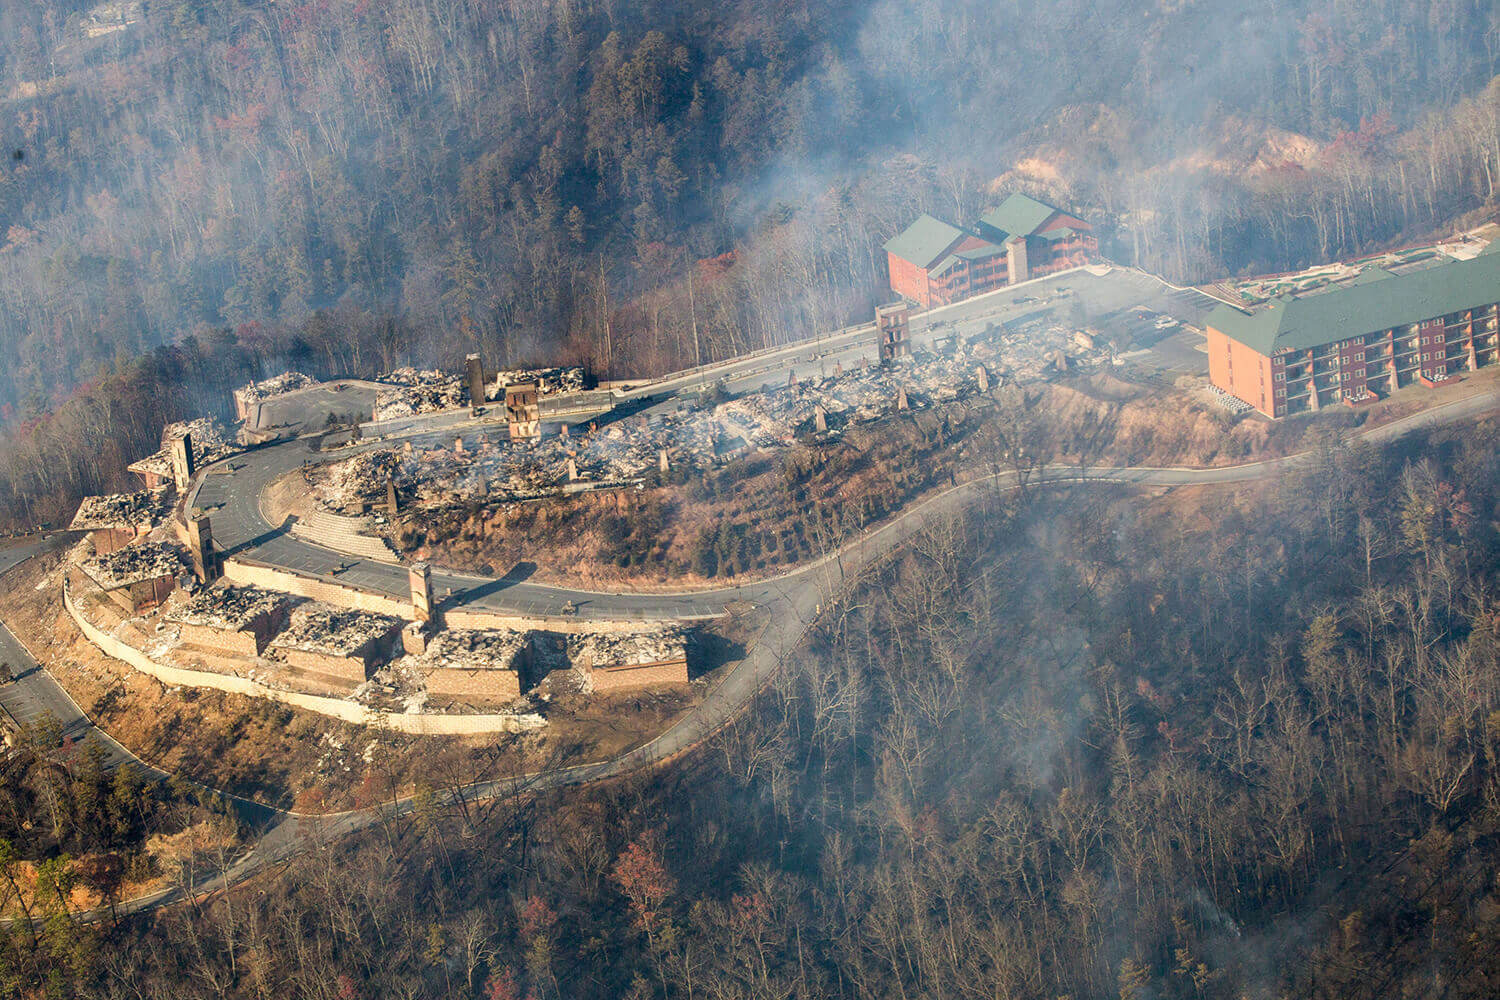 Image of Gatlinburg under smoke